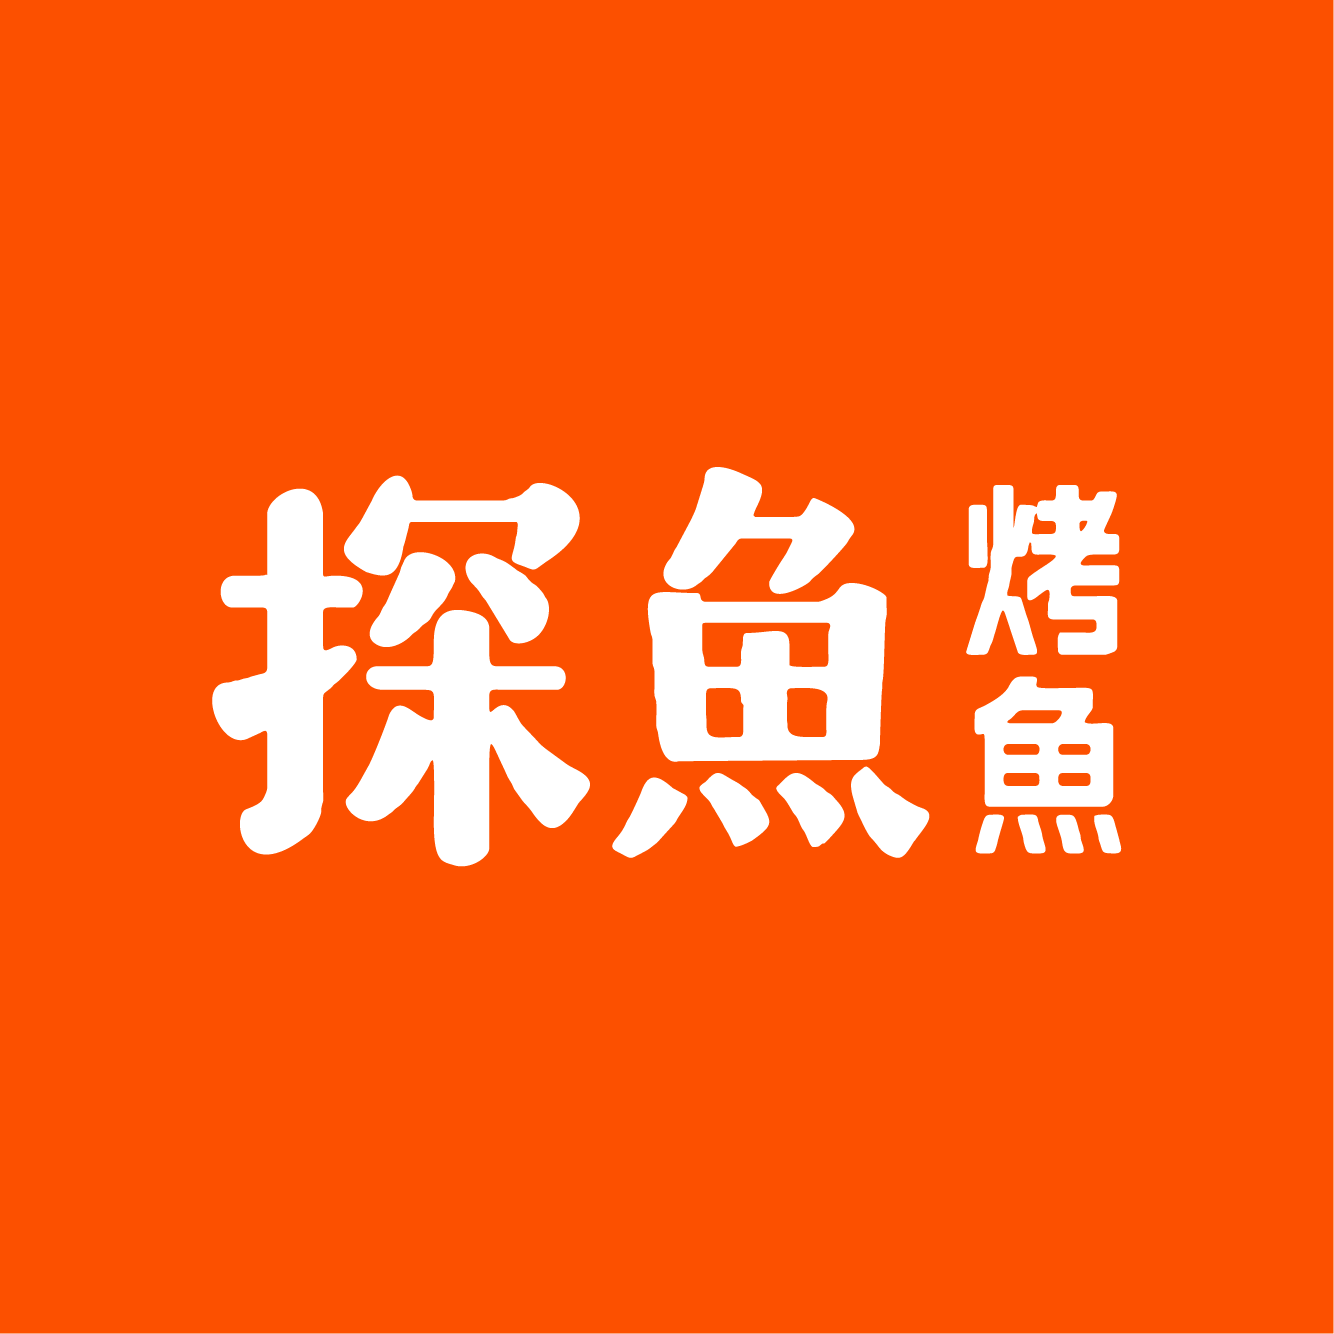 TANYU Logo 320 x 320px.png